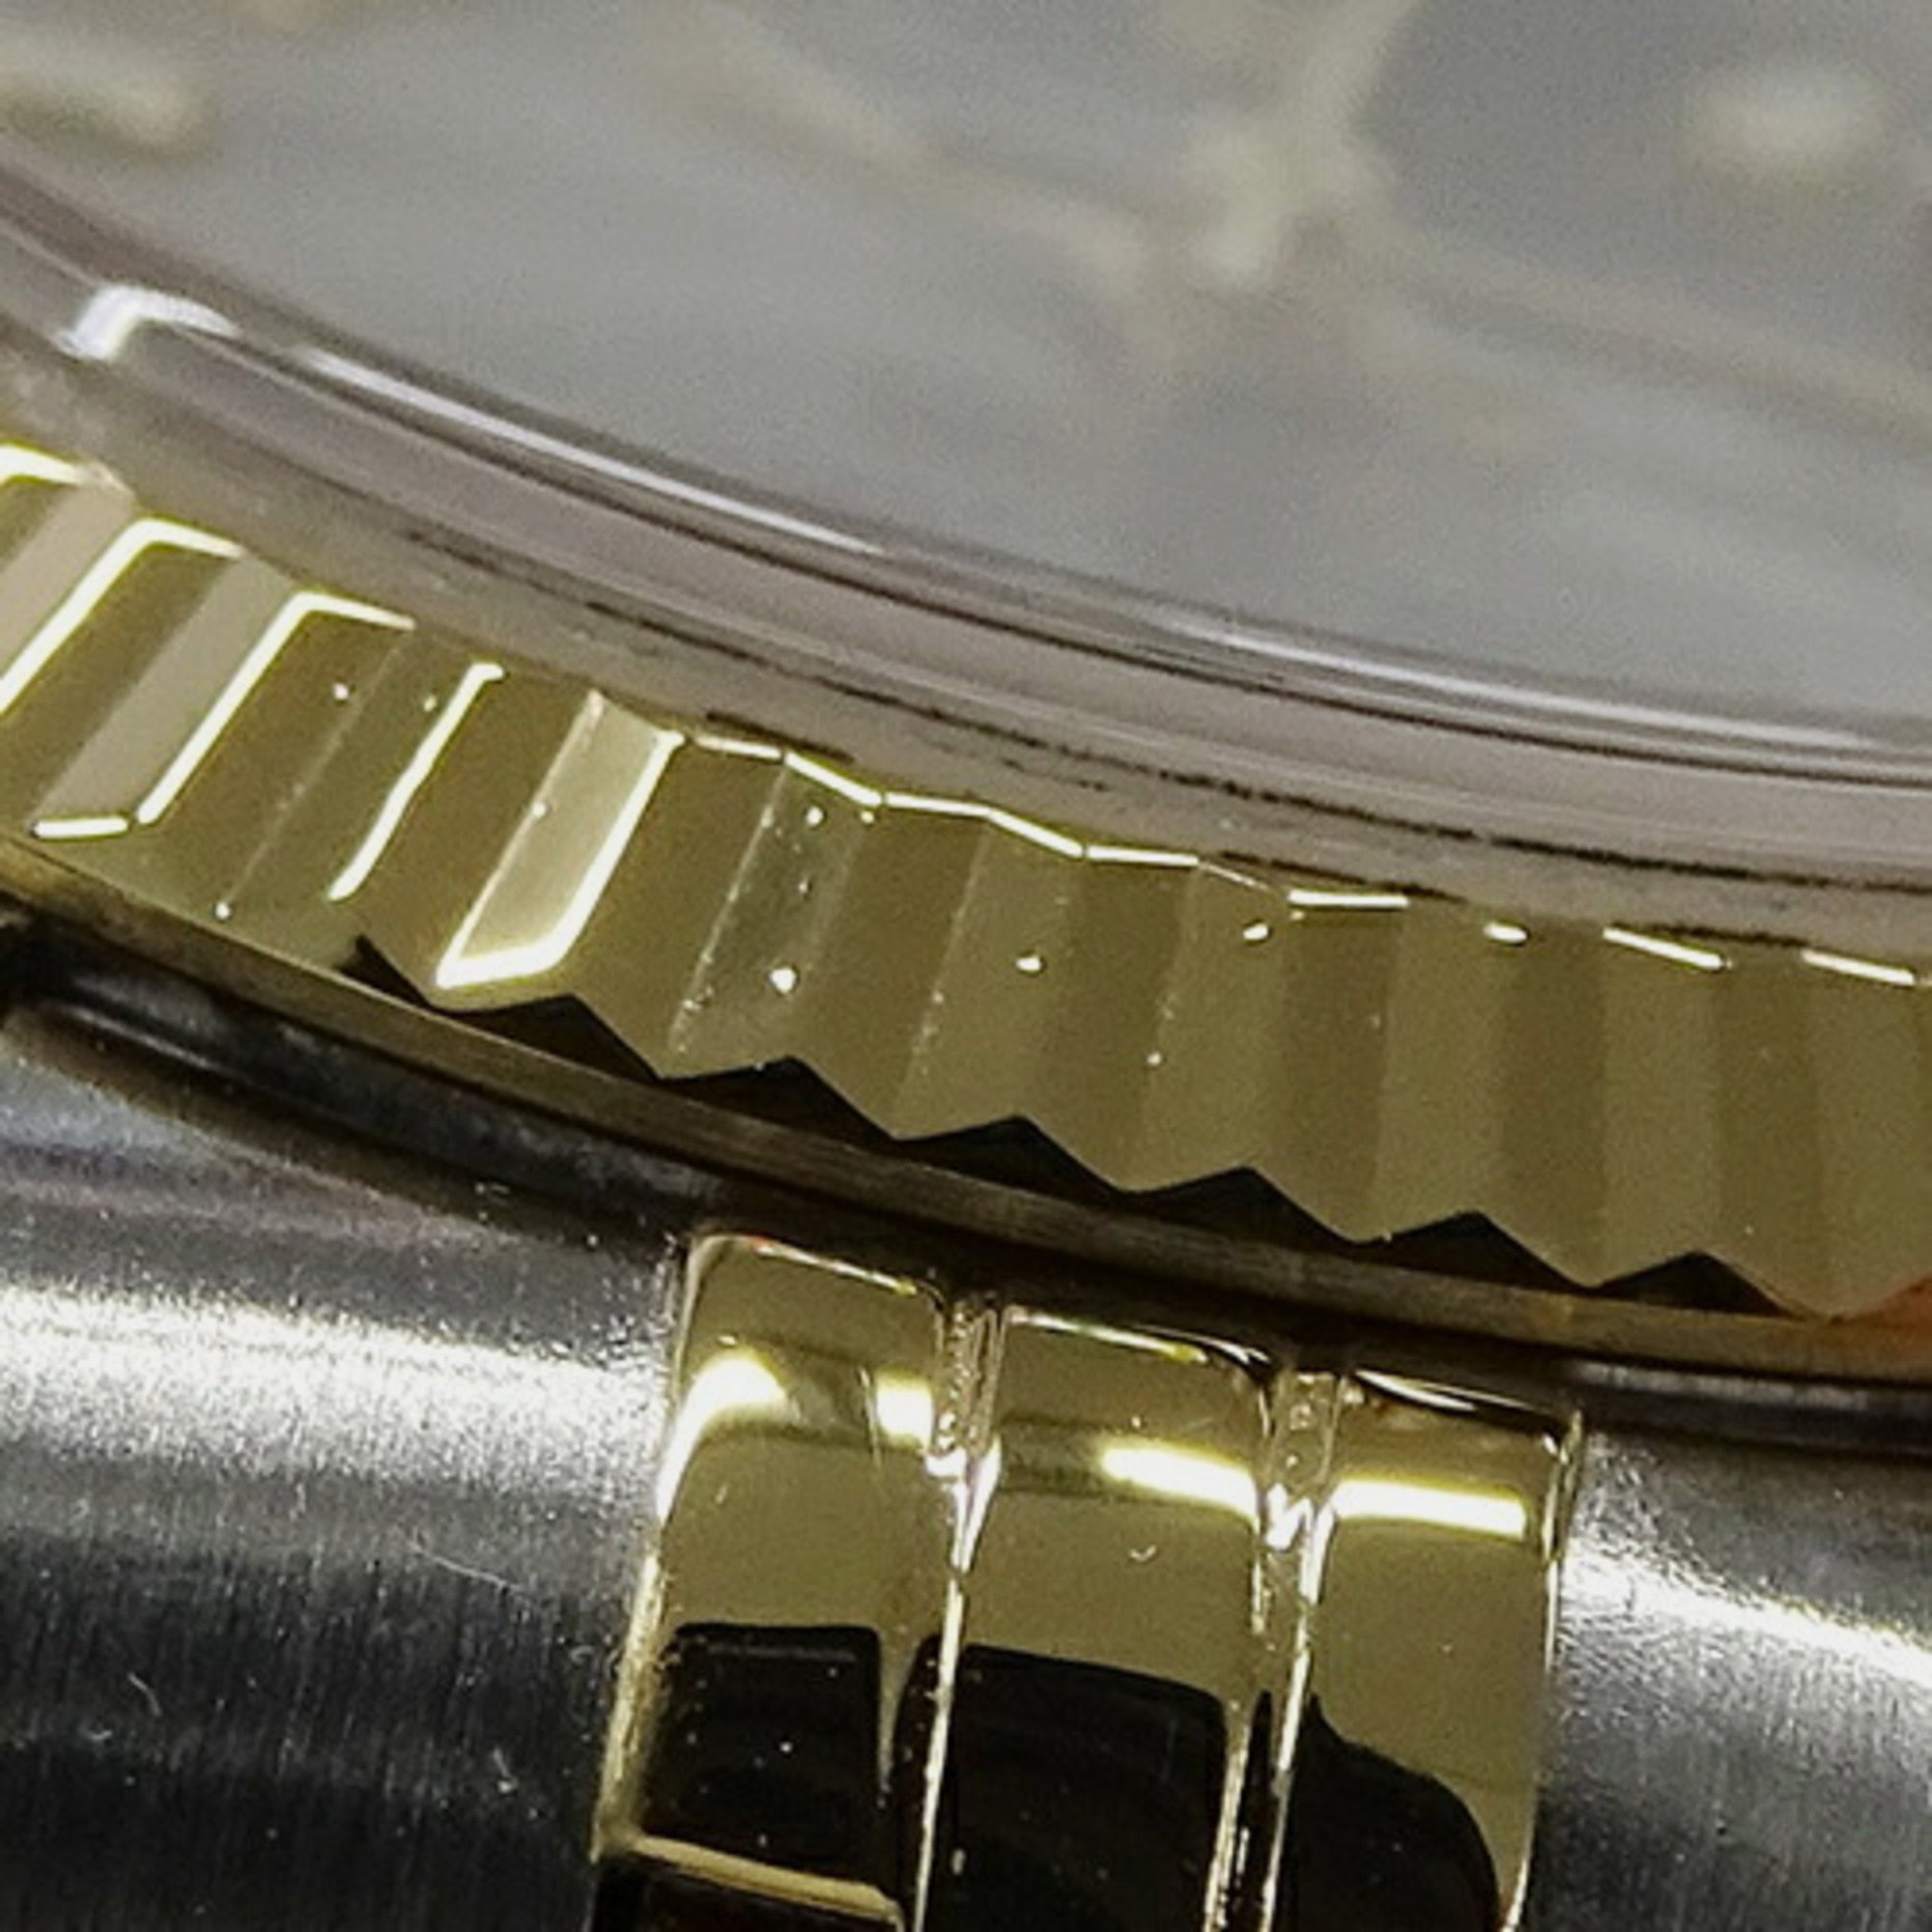 Rolex Grey 18k Yellow Gold Stainless Steel Datejust 79173 Automatic Women's Wristwatch 26 Mm